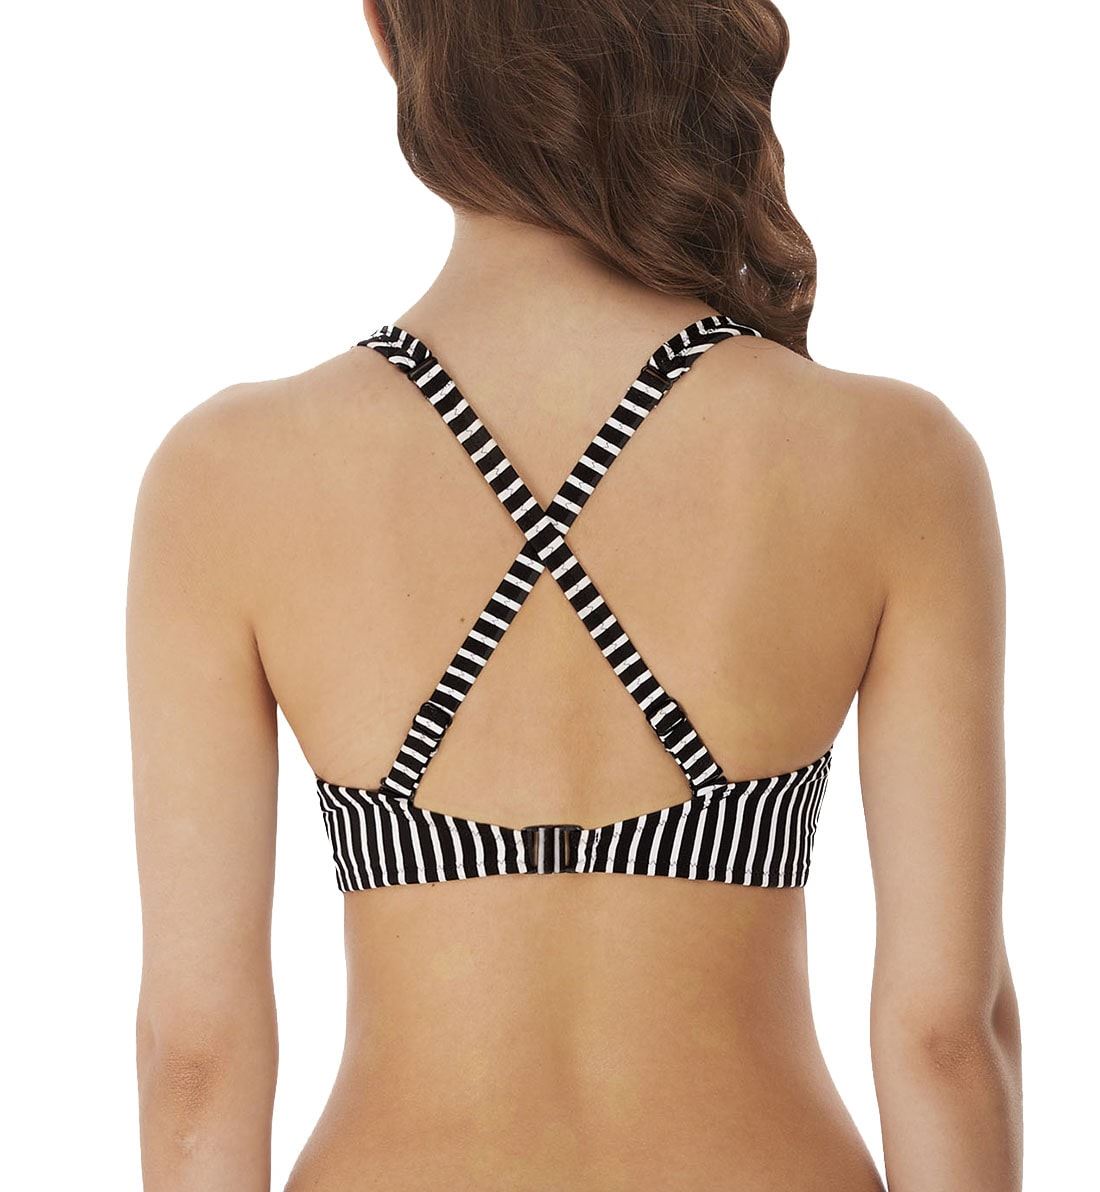 Freya Beach Hut Underwire High Apex Convertible Bikini (6790),30F,Black - Black,30F